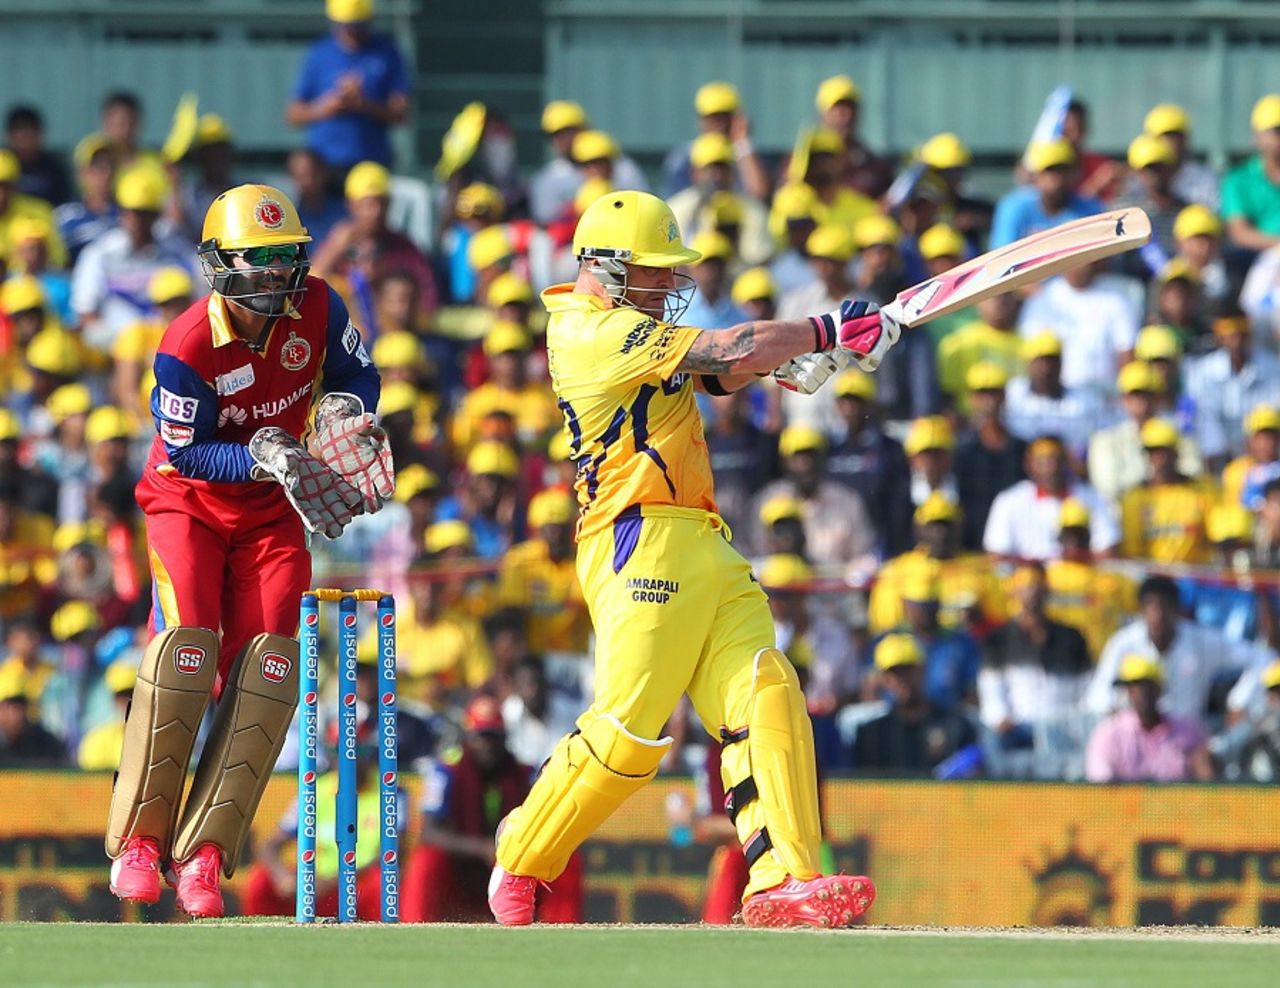 Brendon McCullum unleashes a pull,  Chennai Super Kings v Royal Challengers Bangalore, IPL 2015, Chennai, May 4, 2015